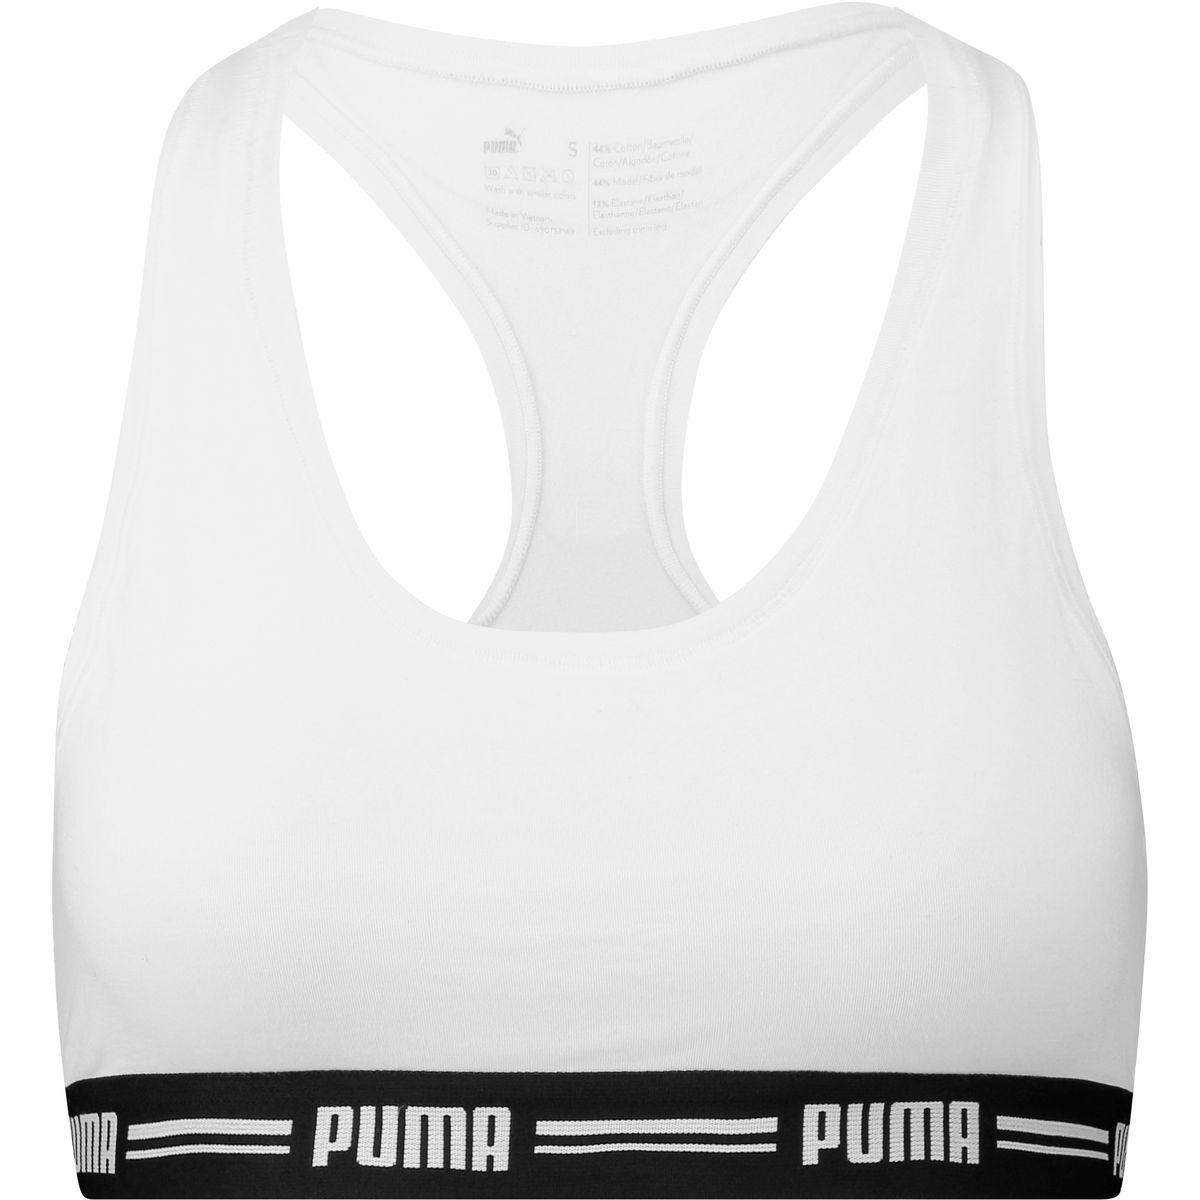 Puma Racer Back Top Damen Top